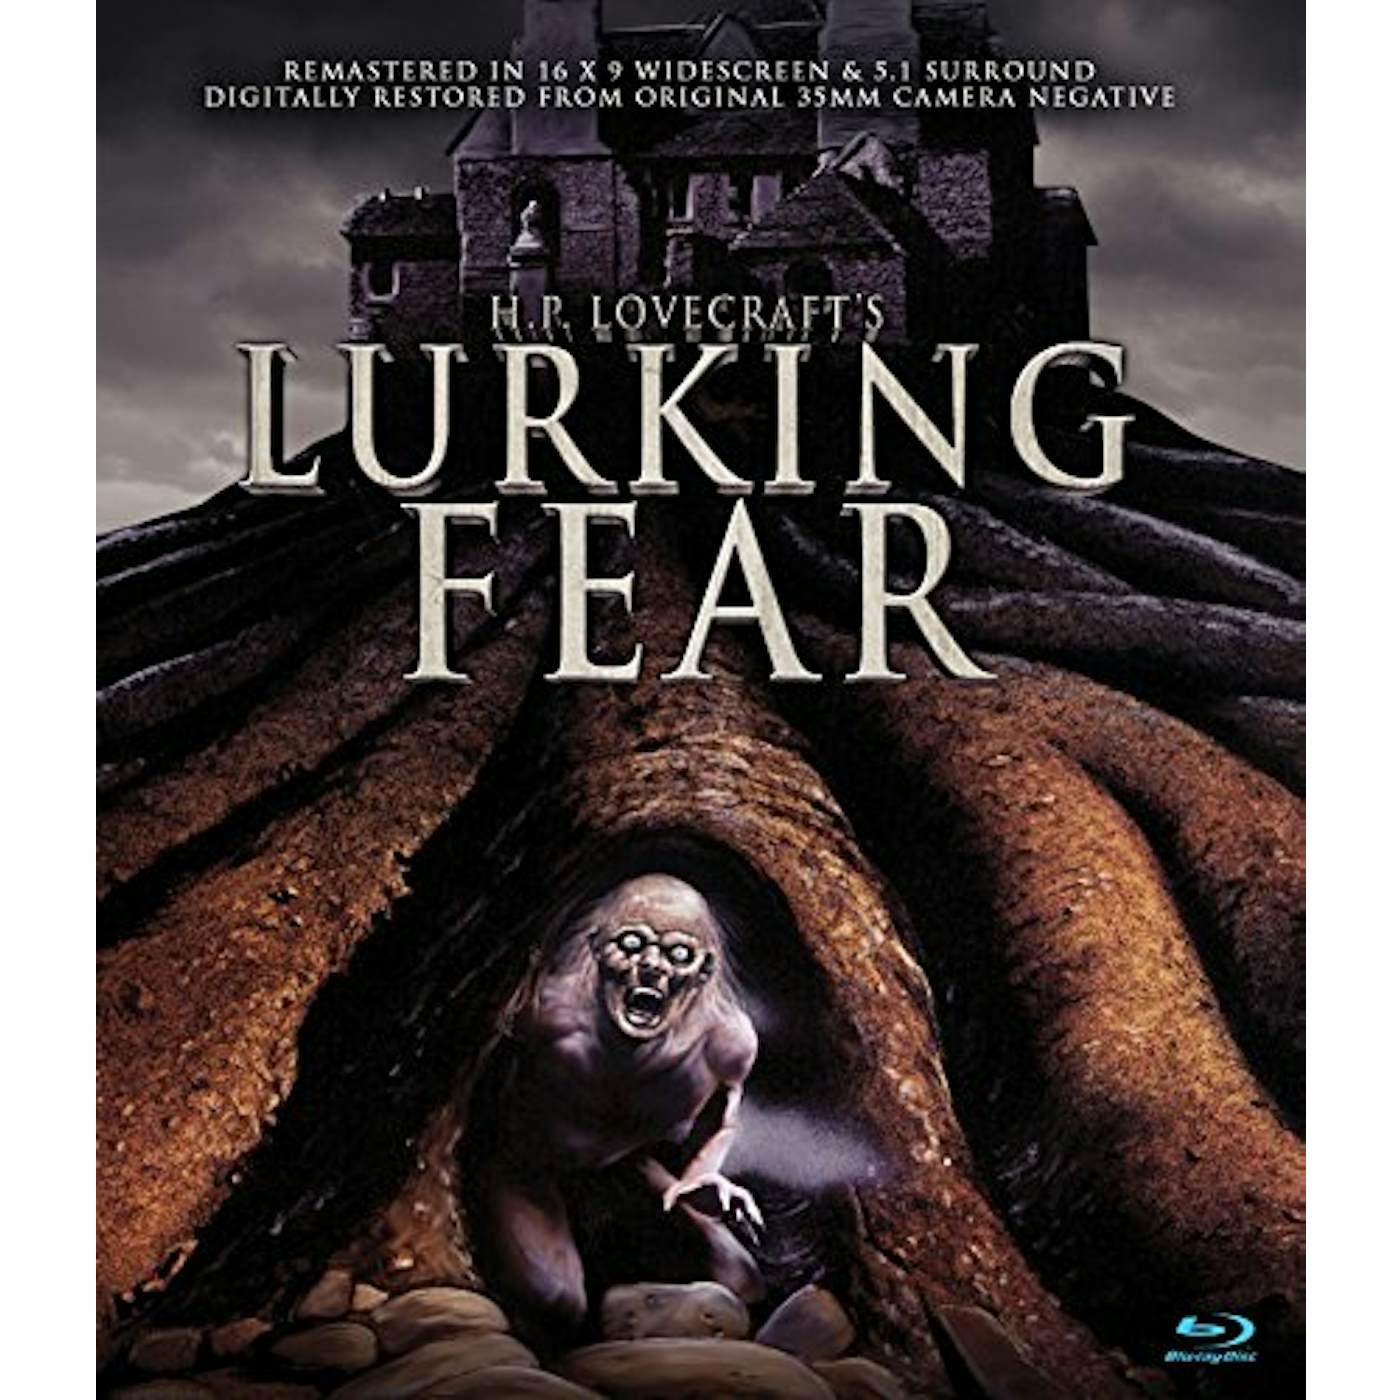 The Lurking Fear Blu-ray